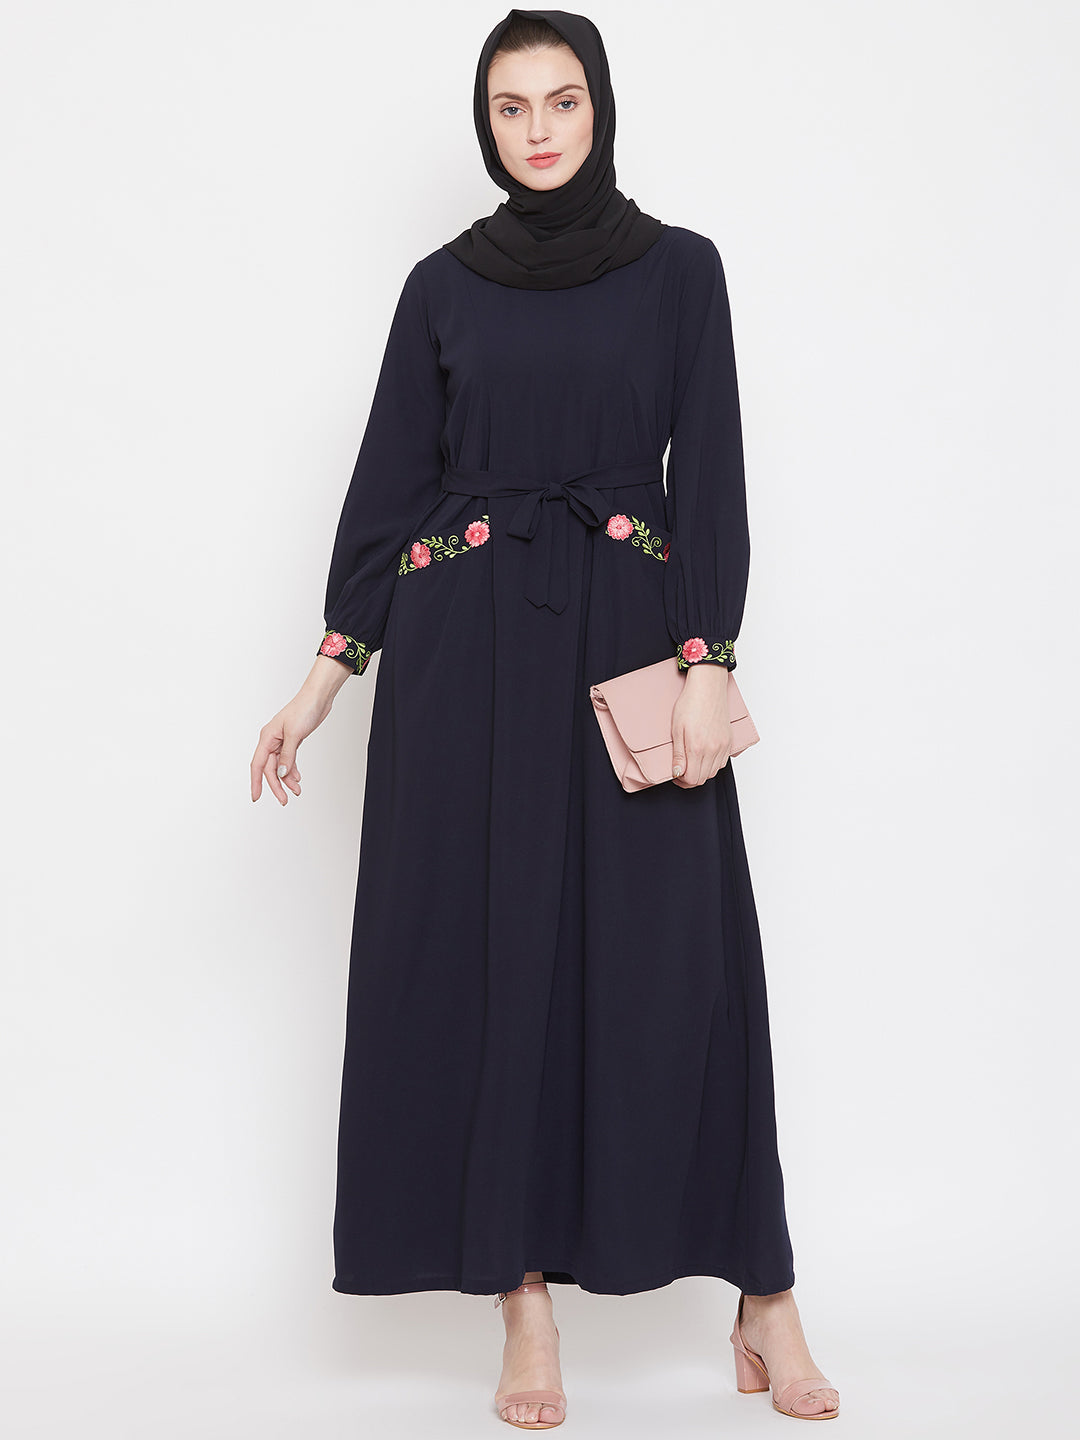 Blue Embroidery Abaya Dress with Black Georgette Hijab